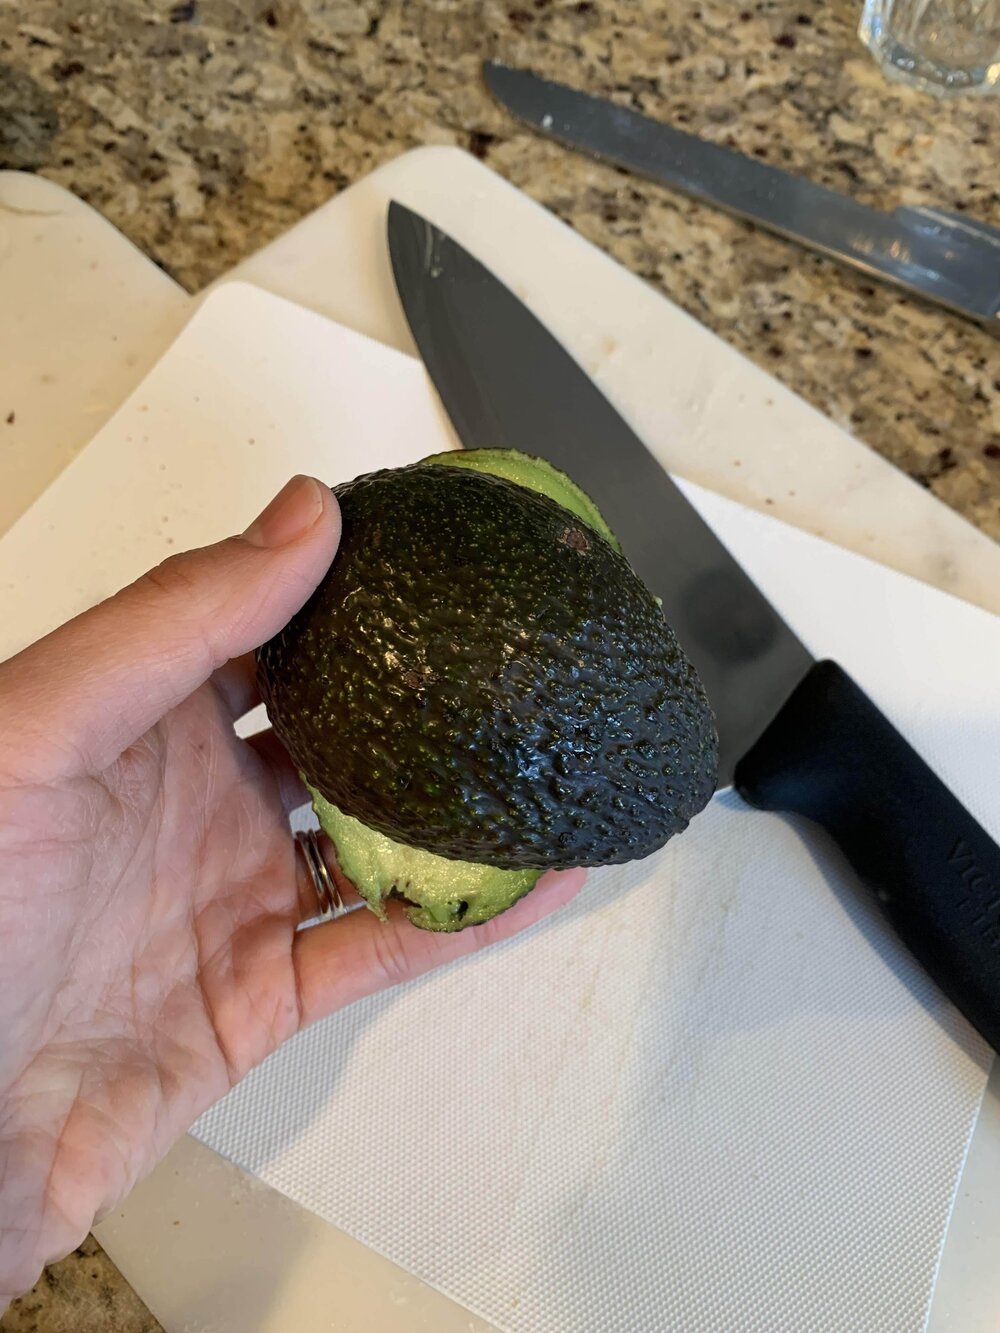 Step 2: Twist the avocado to open it